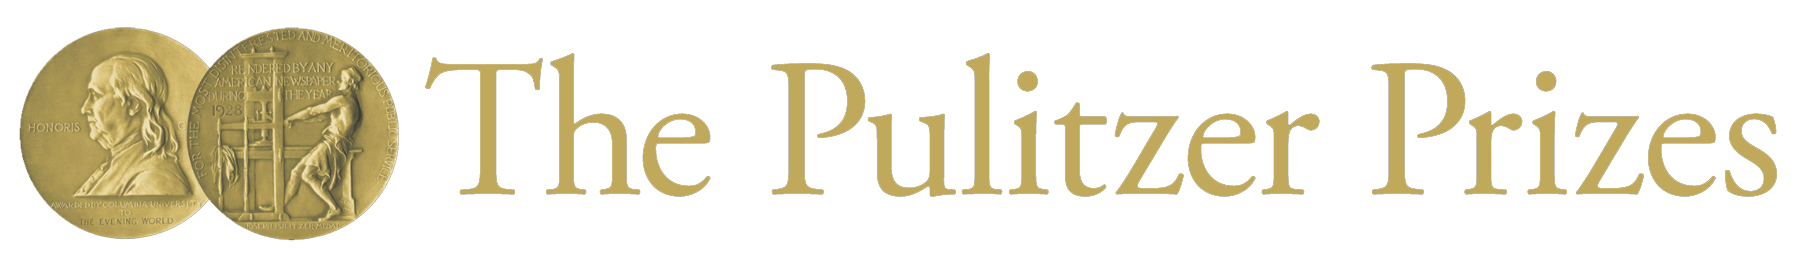 pulitzer-prizes-logo-nyt.png